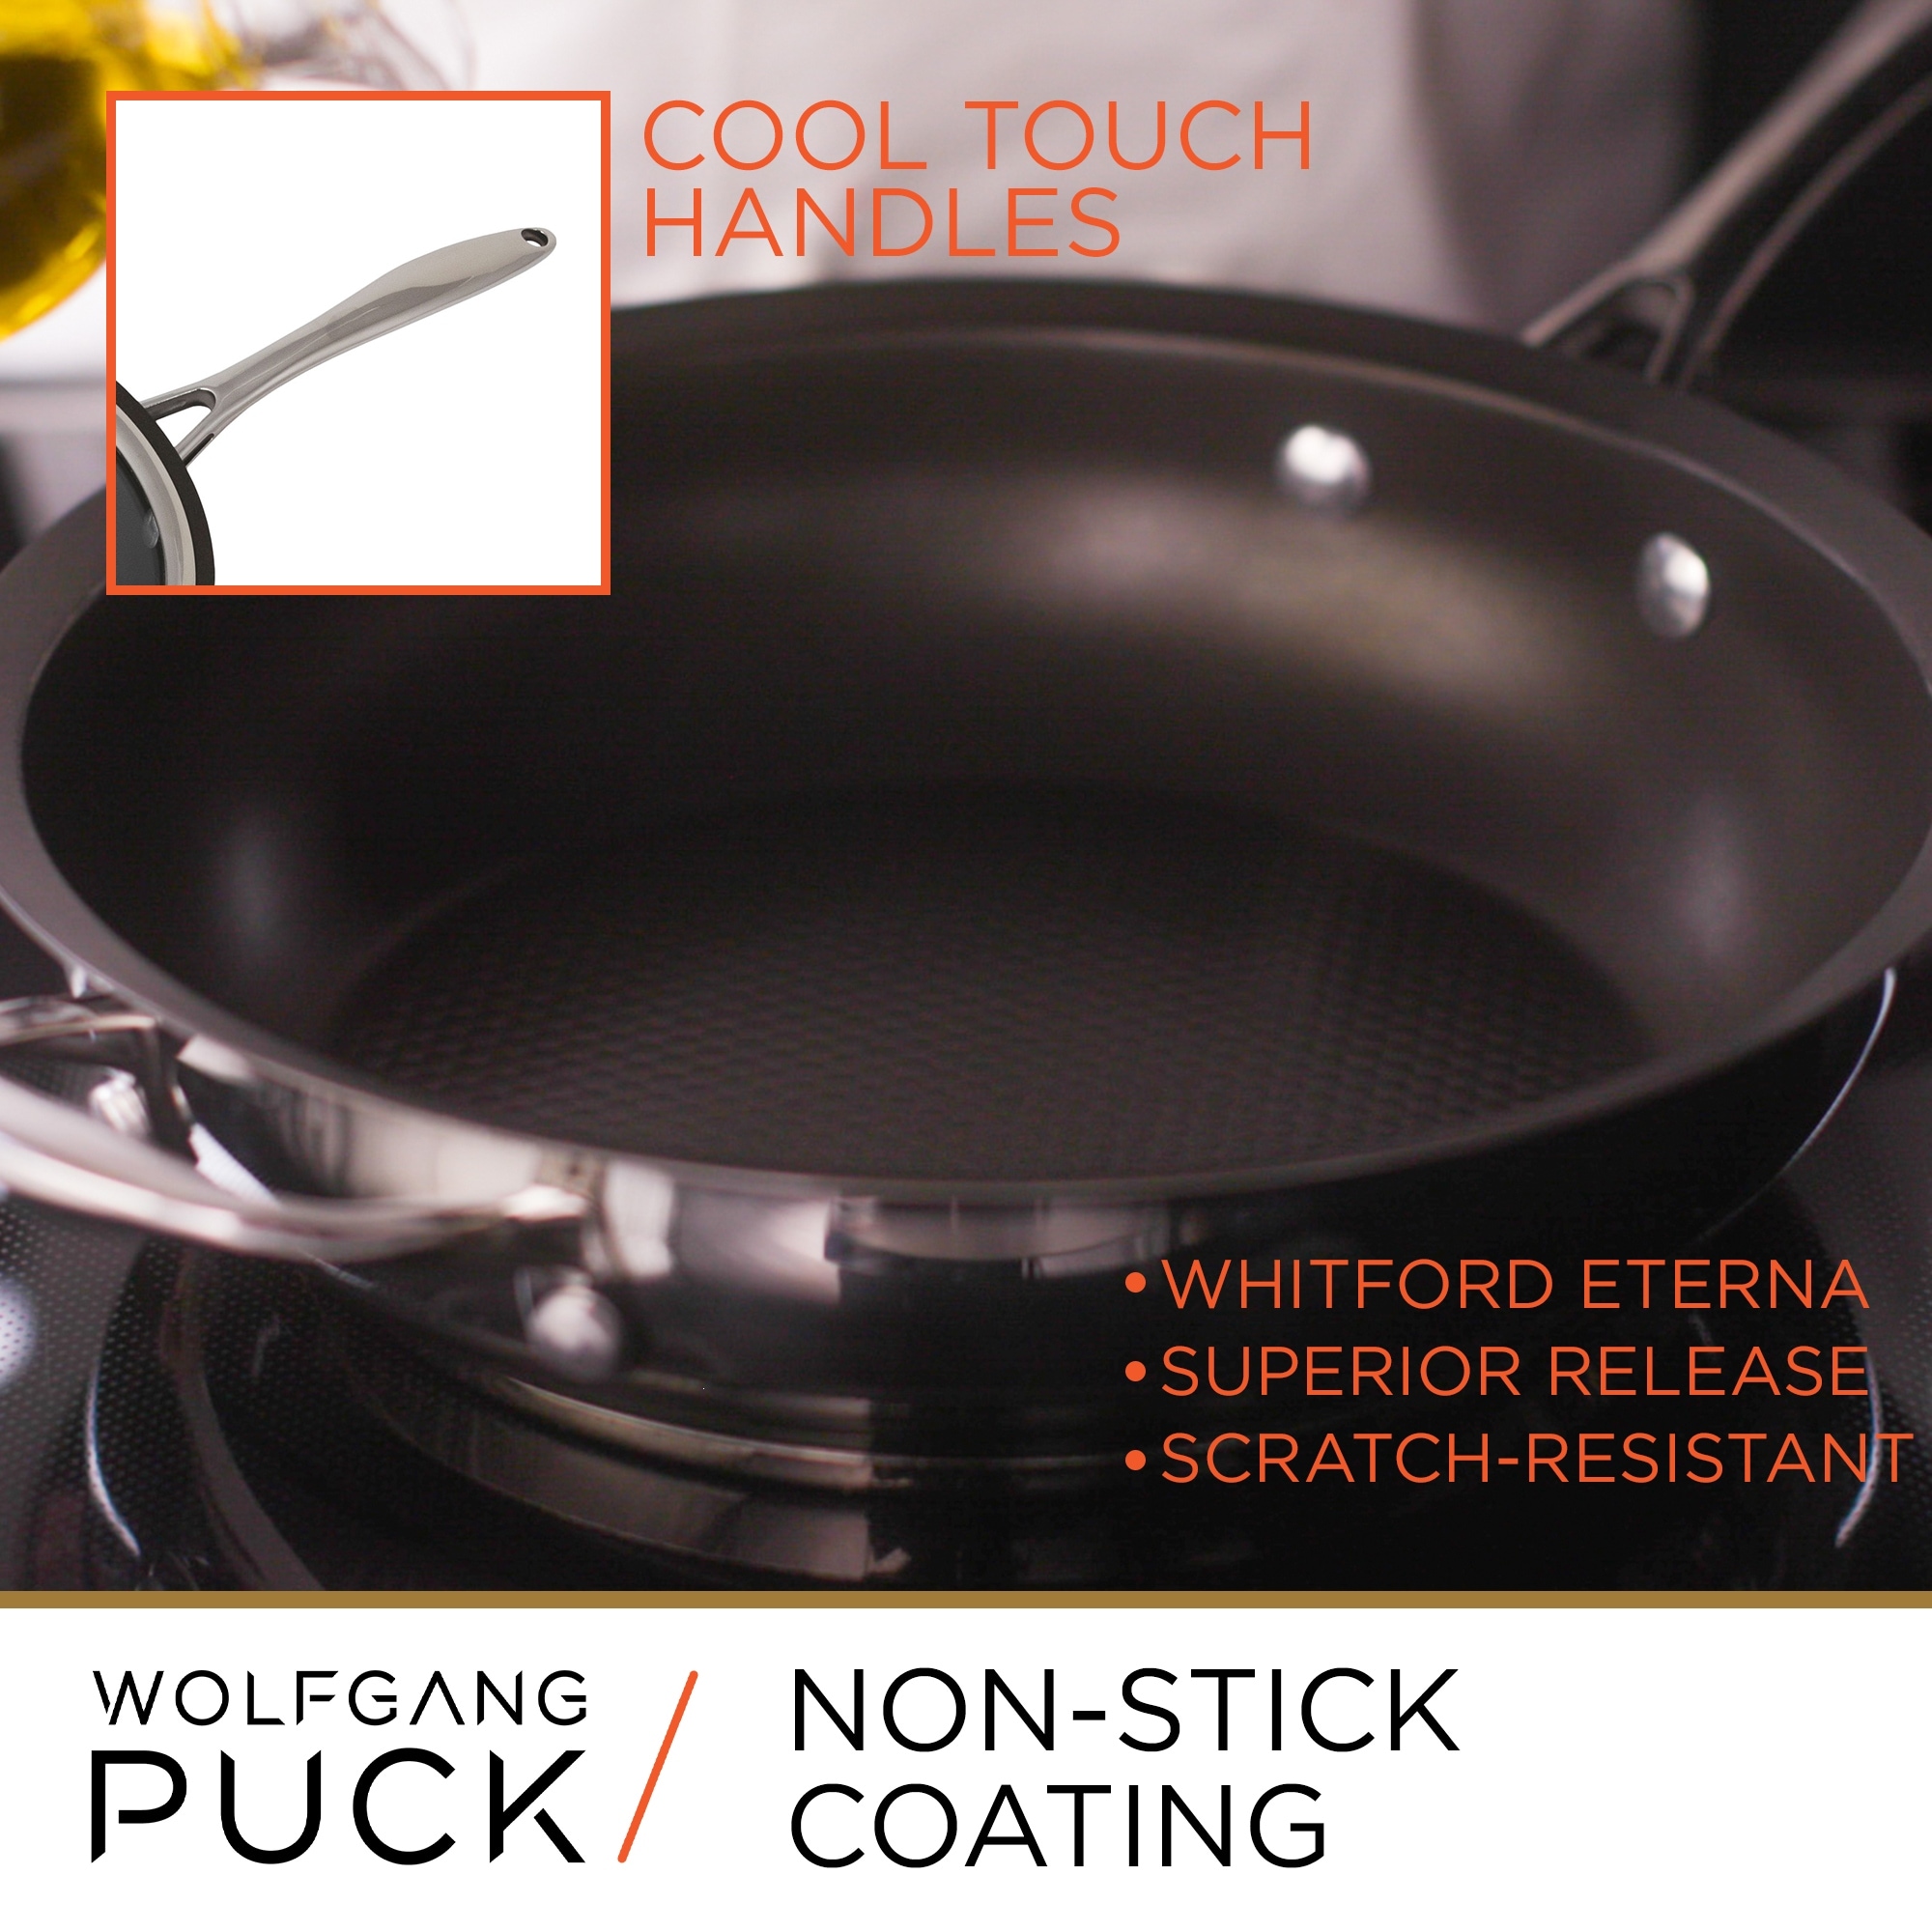 Wolfgang Puck Cookware 1.5 Qt Saucepan 18-10 Stainless Steel NO LID